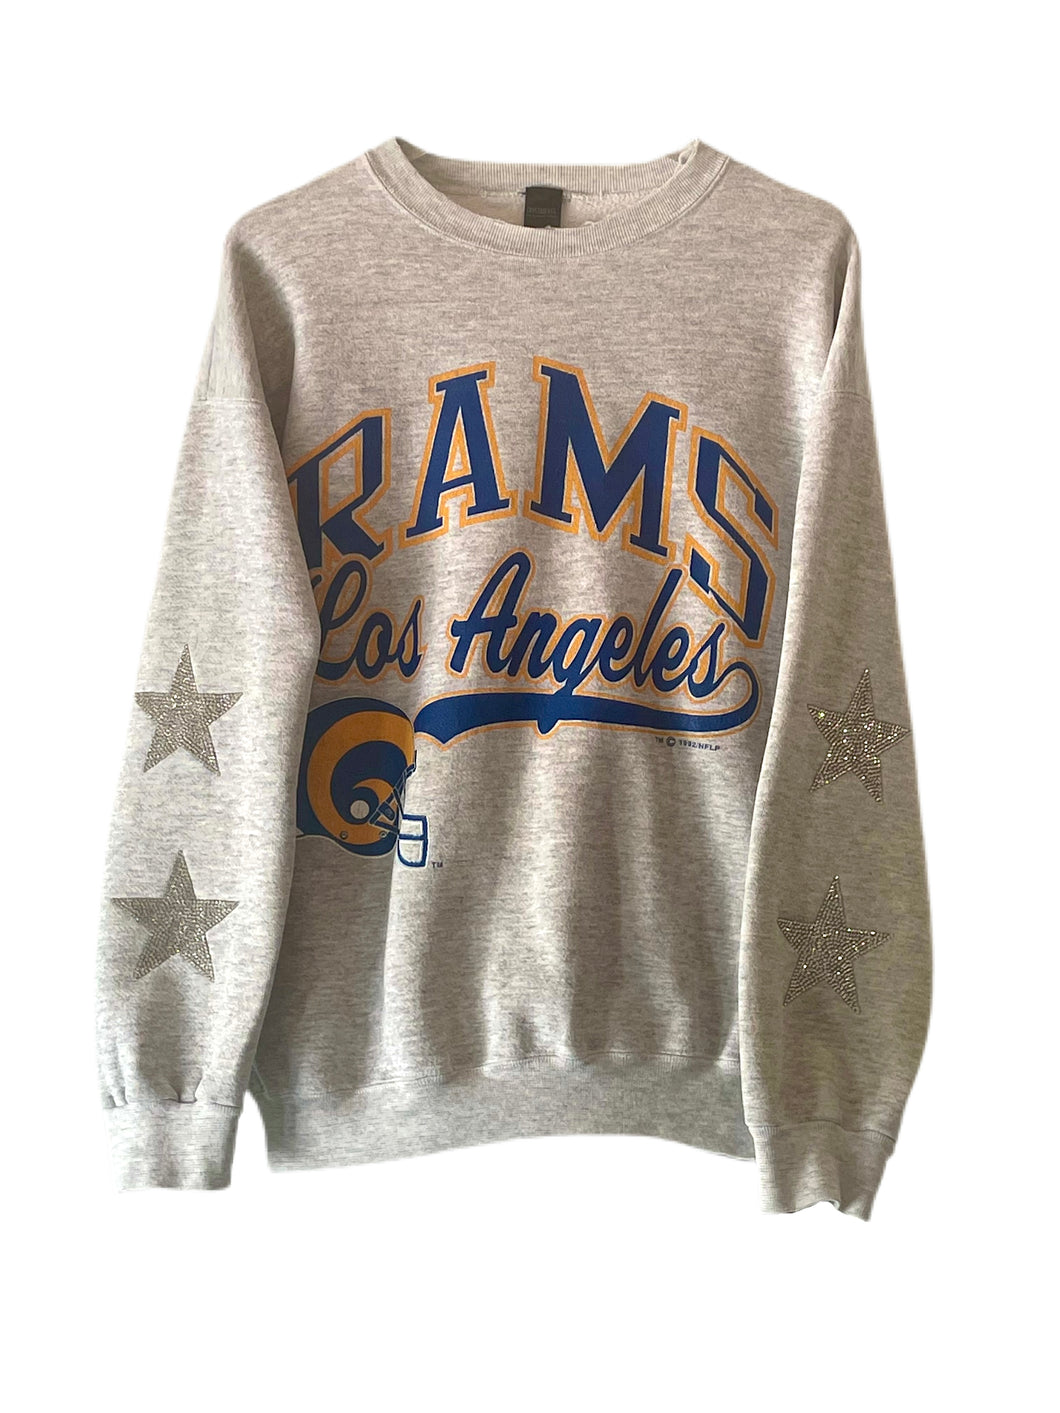 Los Angeles Rams, NFL One of a KIND Vintage LA Rams Sweatshirt